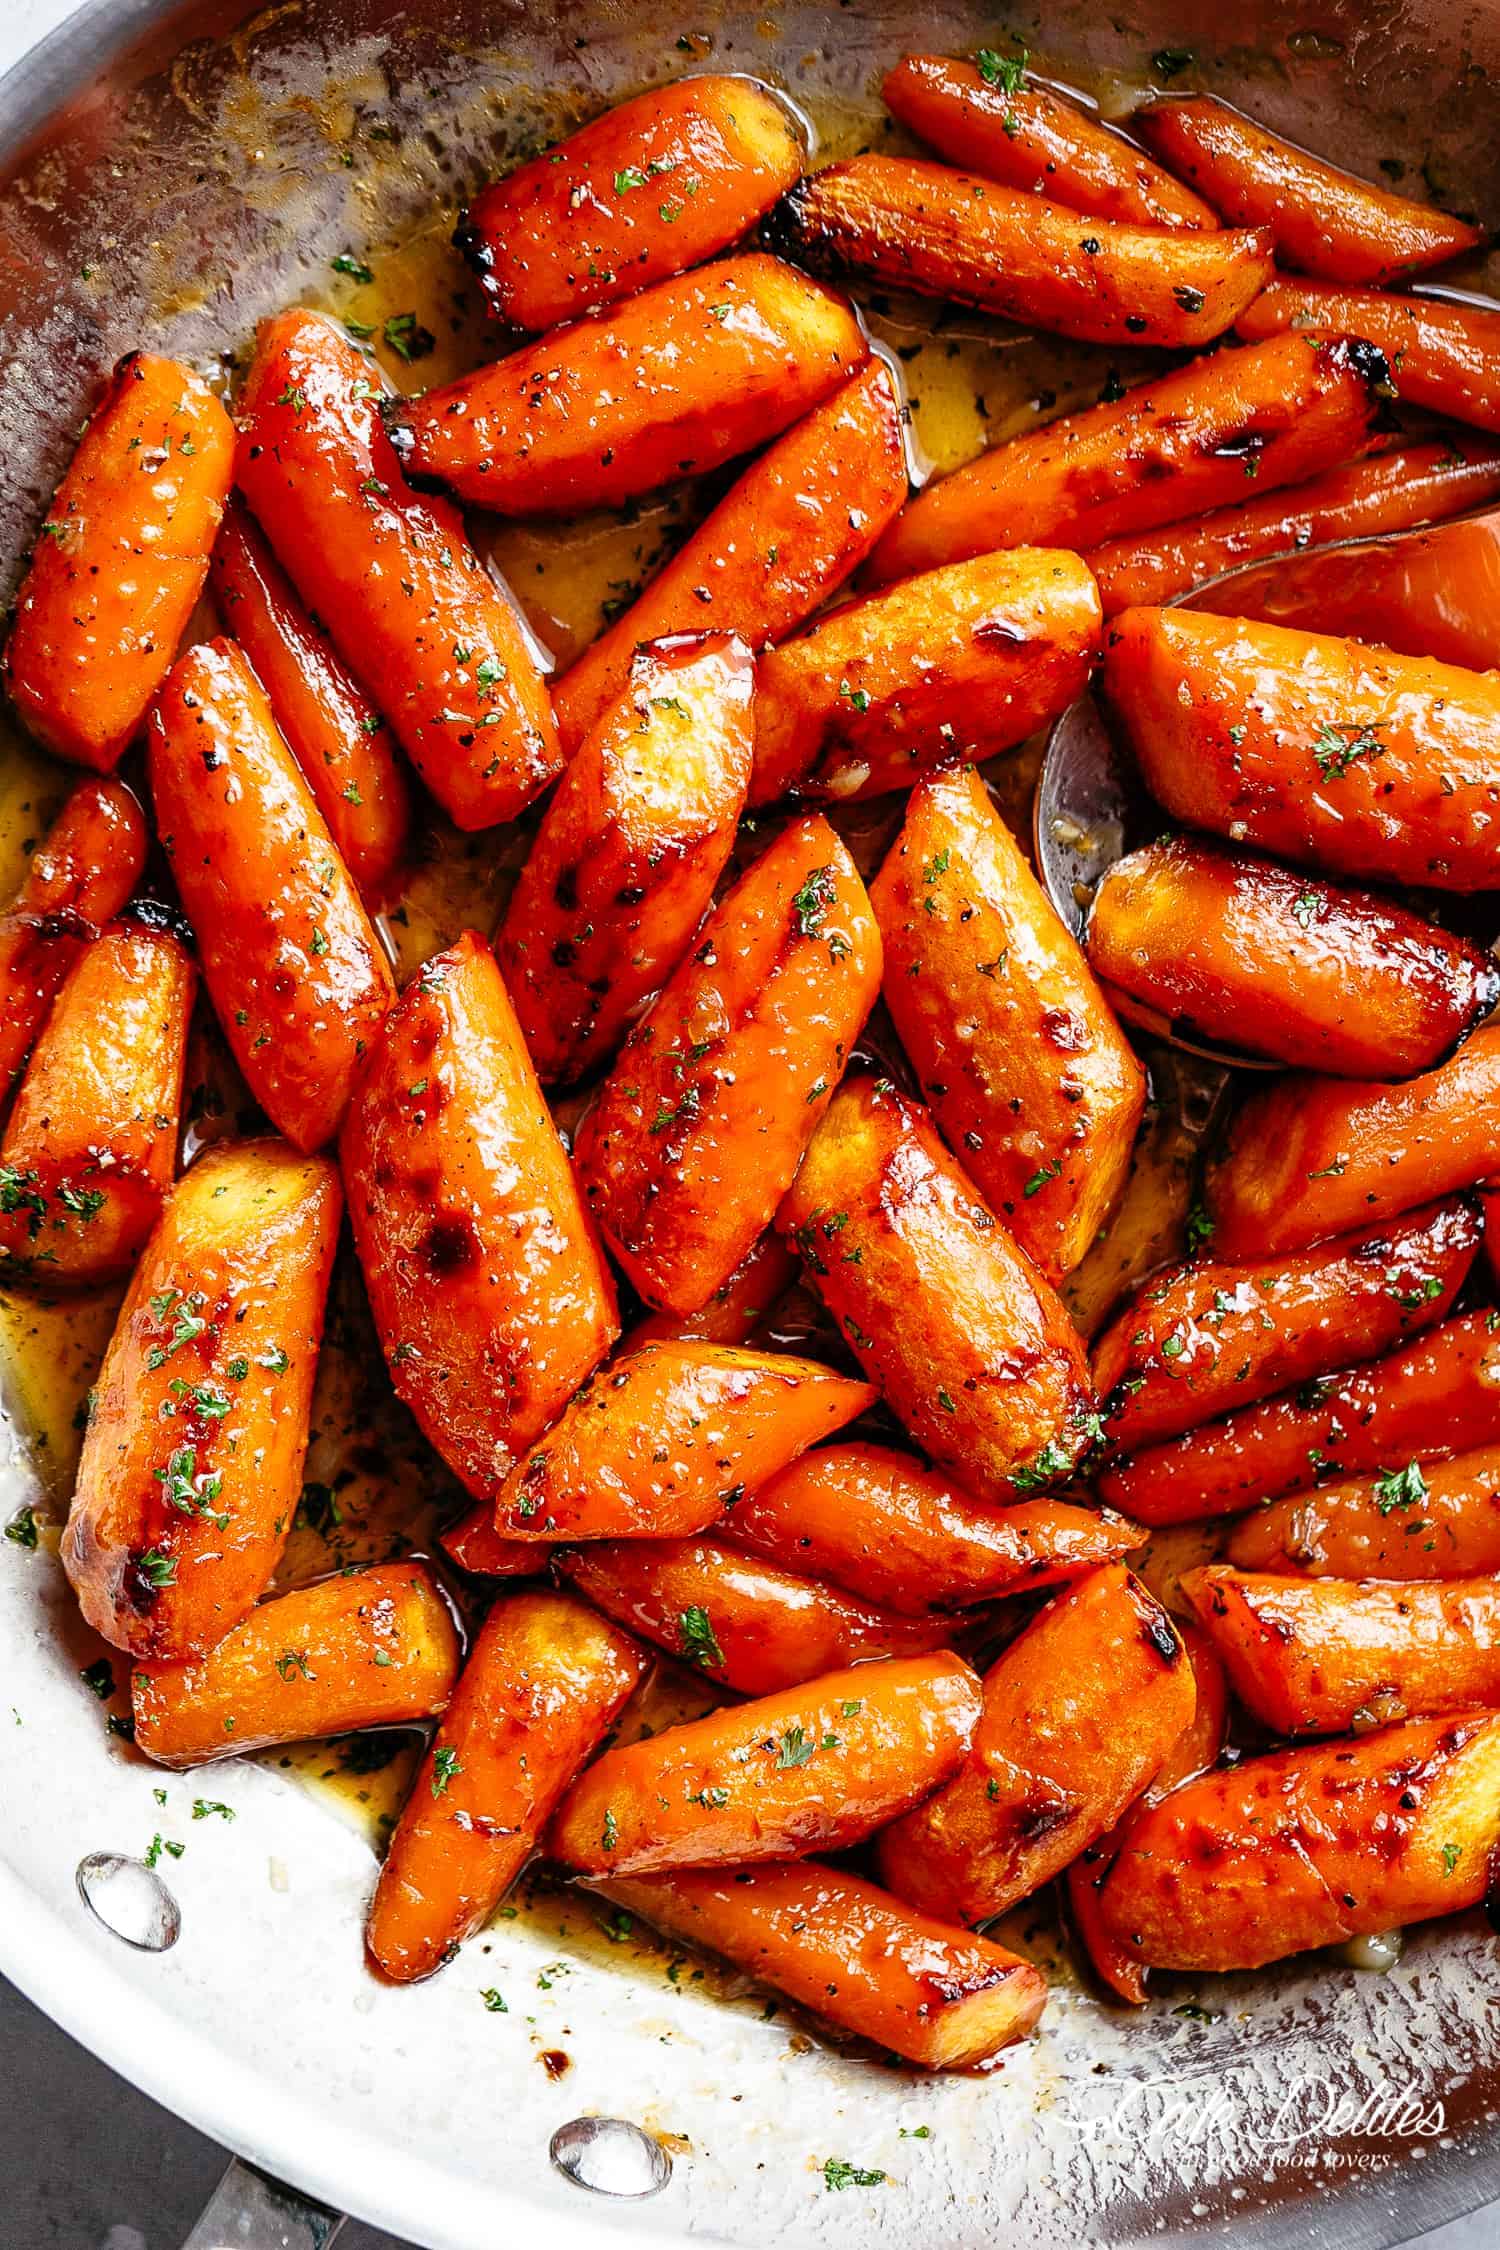 Roasted Carrots with honey glaze